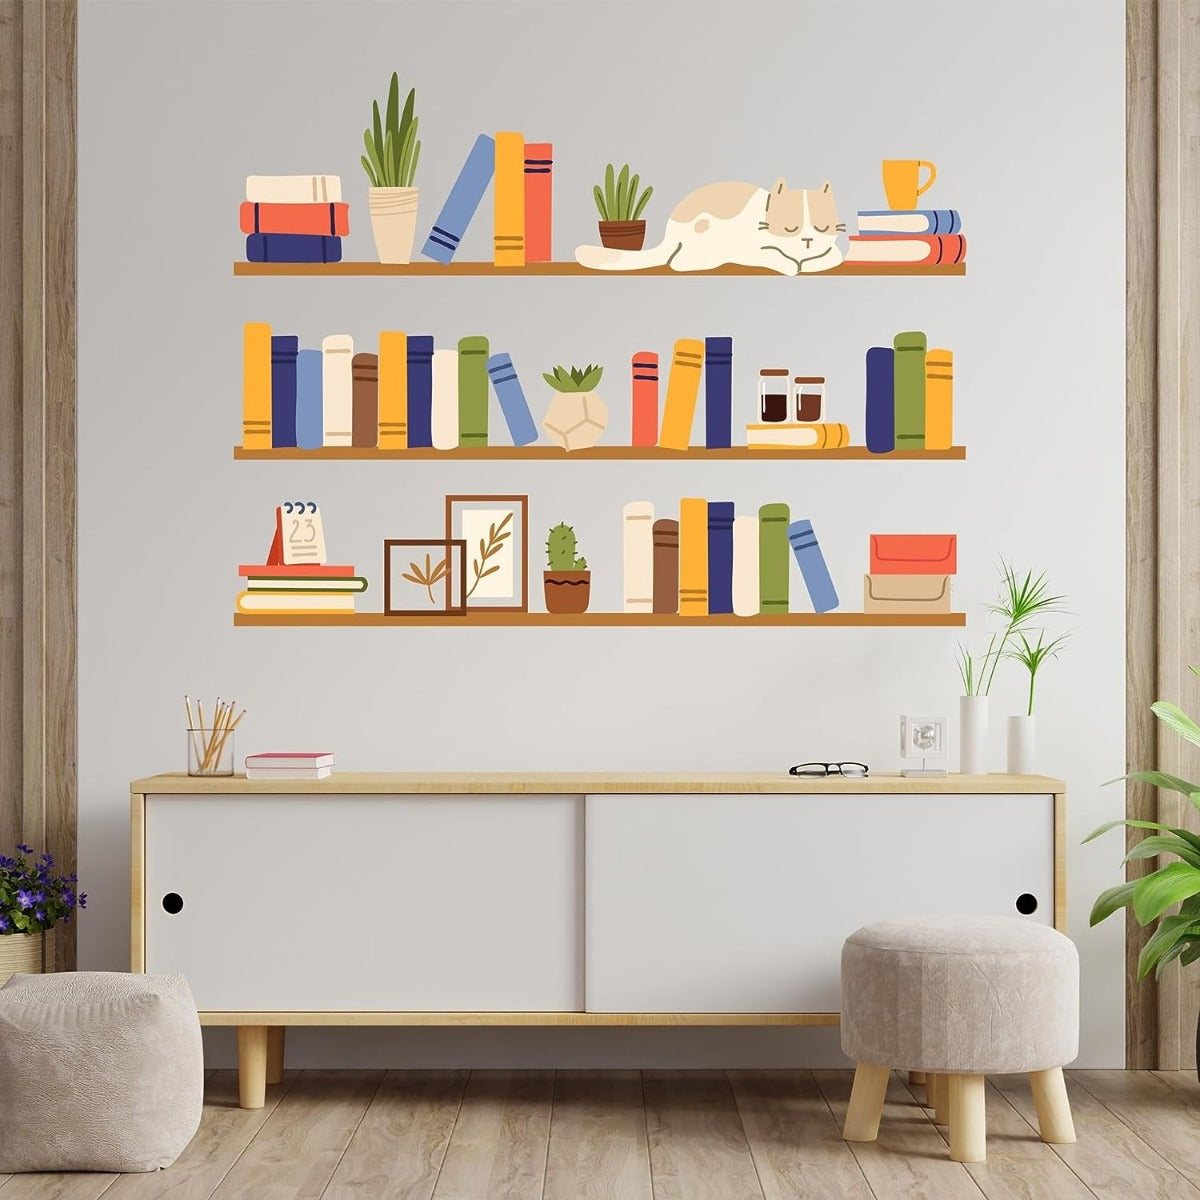 Shelves Books Plants Cat Wall Sticker